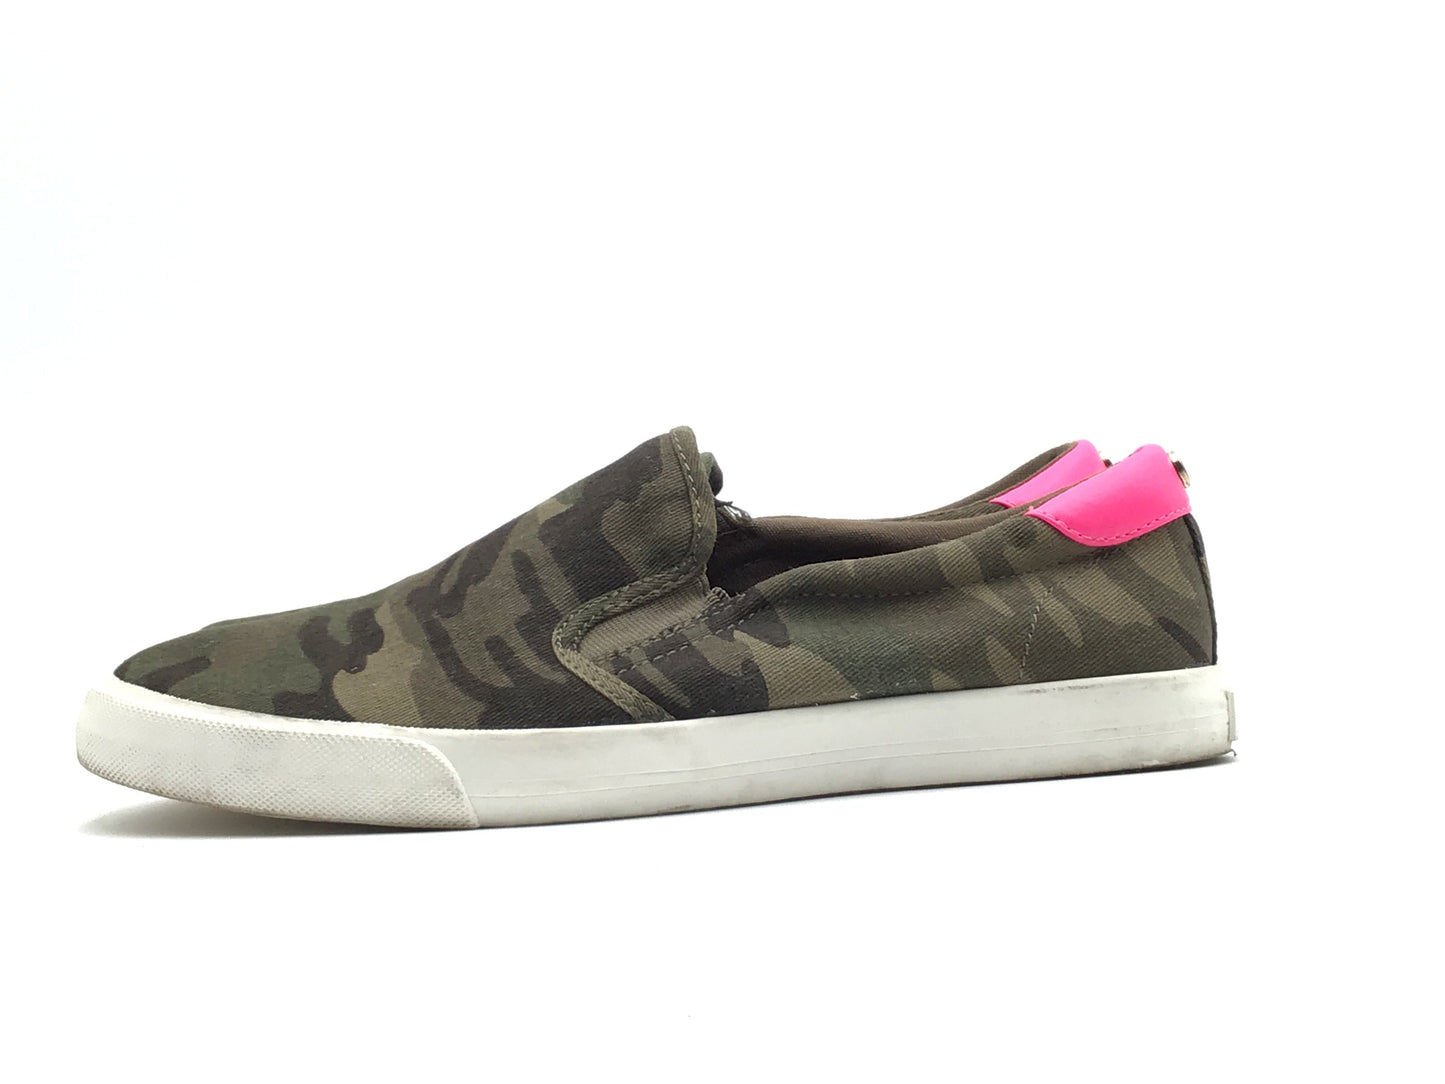 Camouflage Print Shoes Flats Nine West, Size 10